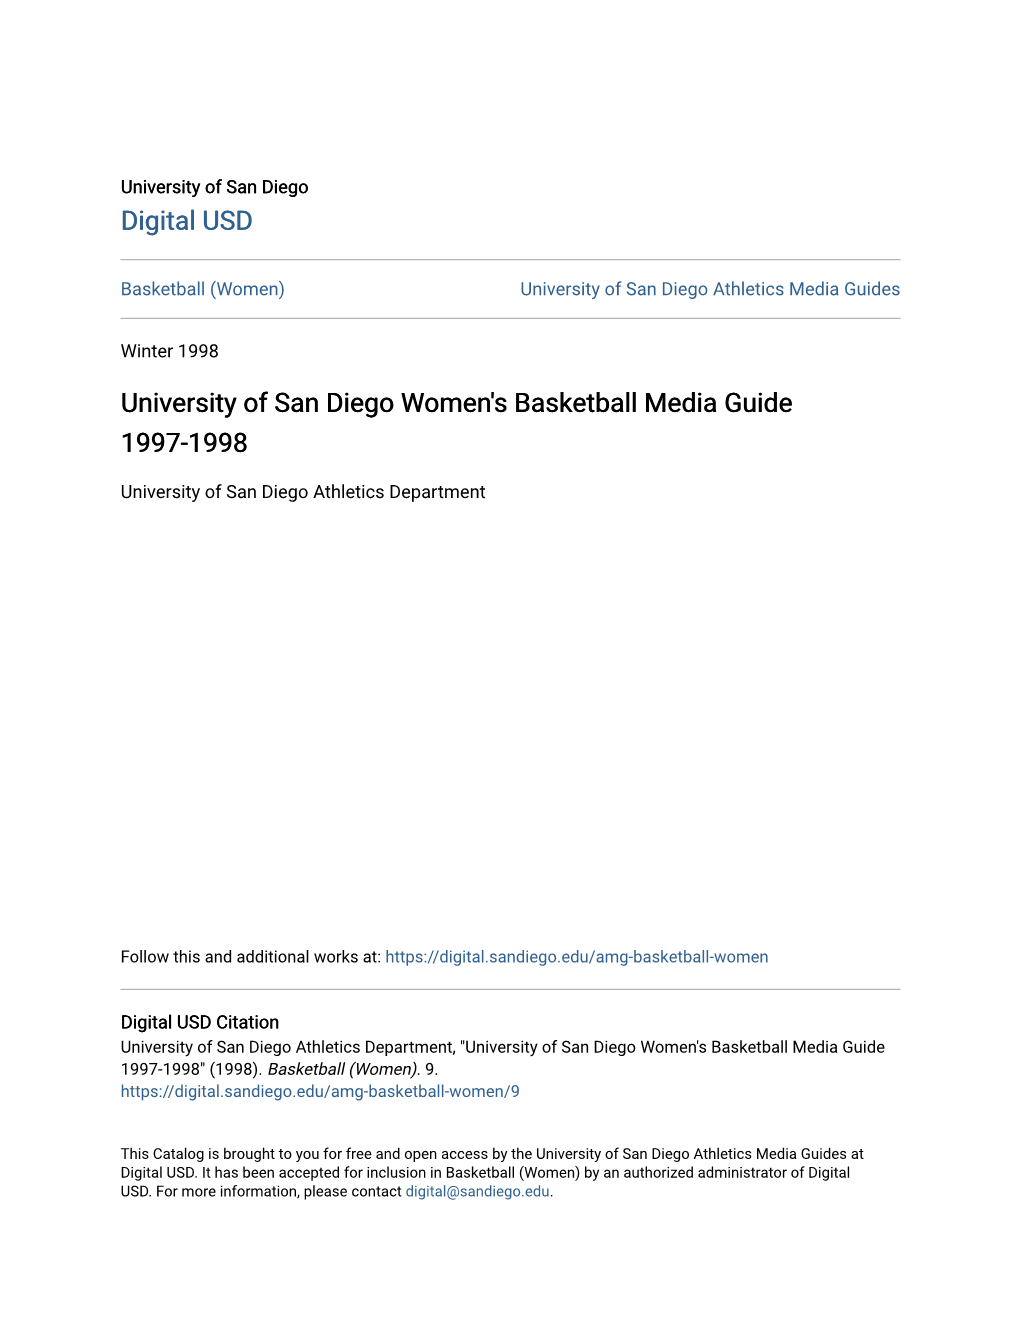 University of San Diego Women's Basketball Media Guide 1997-1998